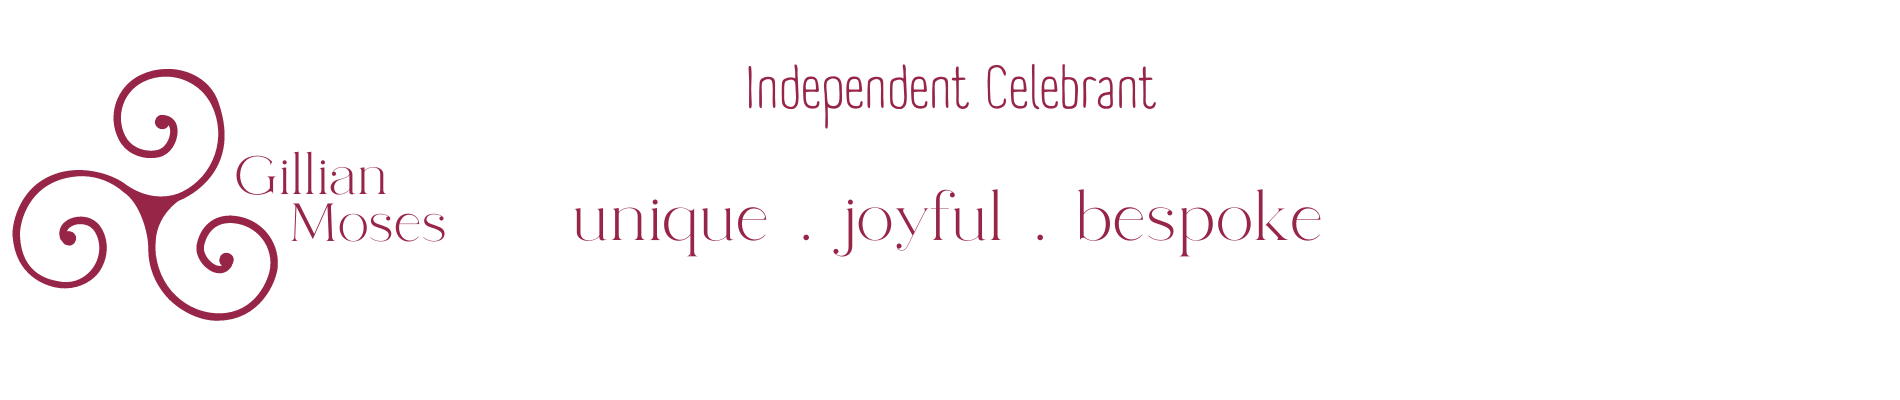 Gillian Moses Independent Celebrant offering unique joyful bespoke ceremonies